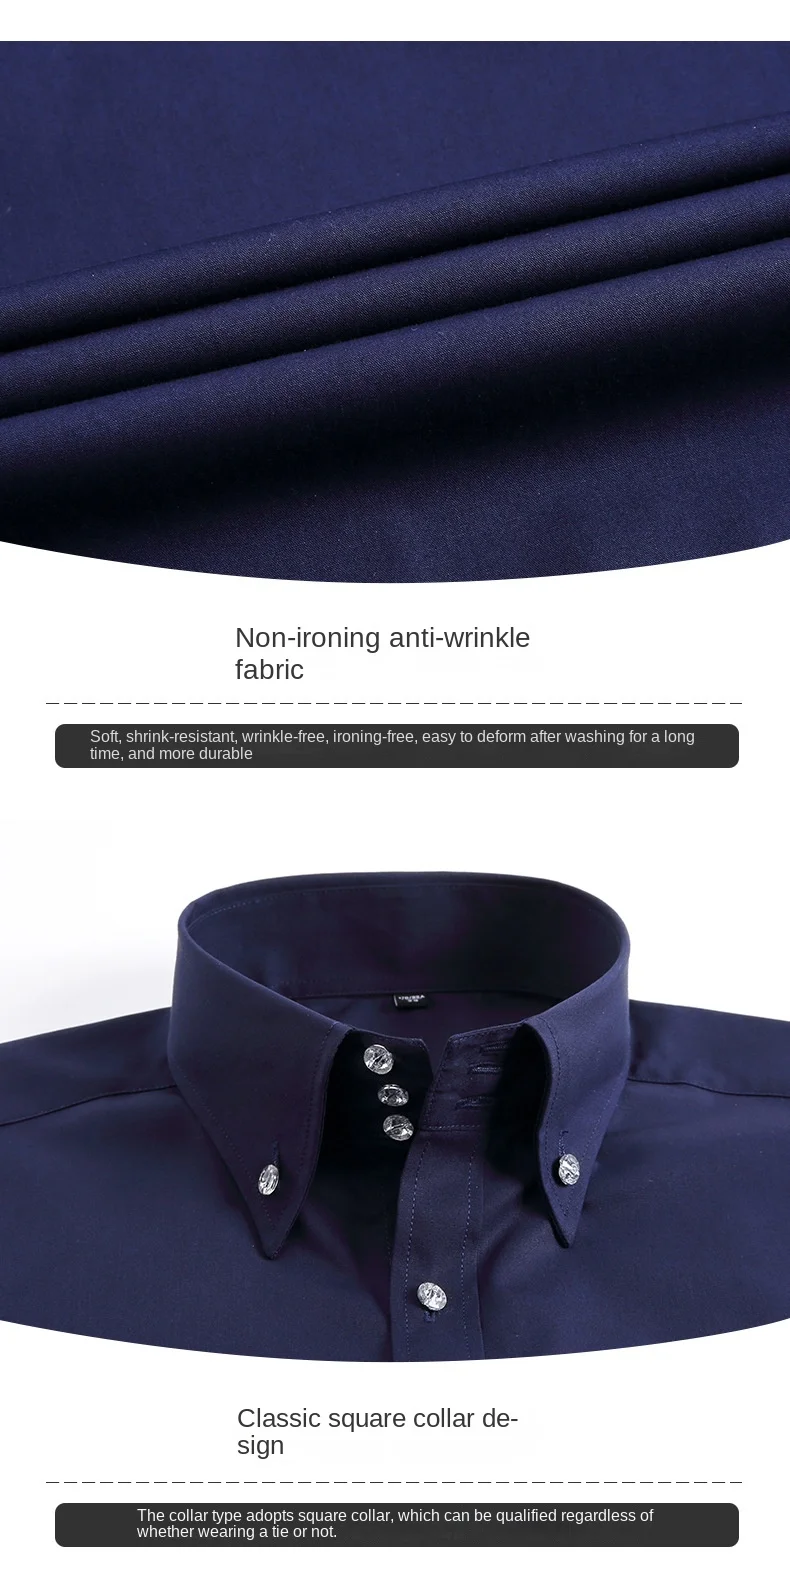 New Men's Long Sleeve Lined Crystal Button Shirt Elastic High Grade Business Leisure Slim Fit Trend Men's Shirt